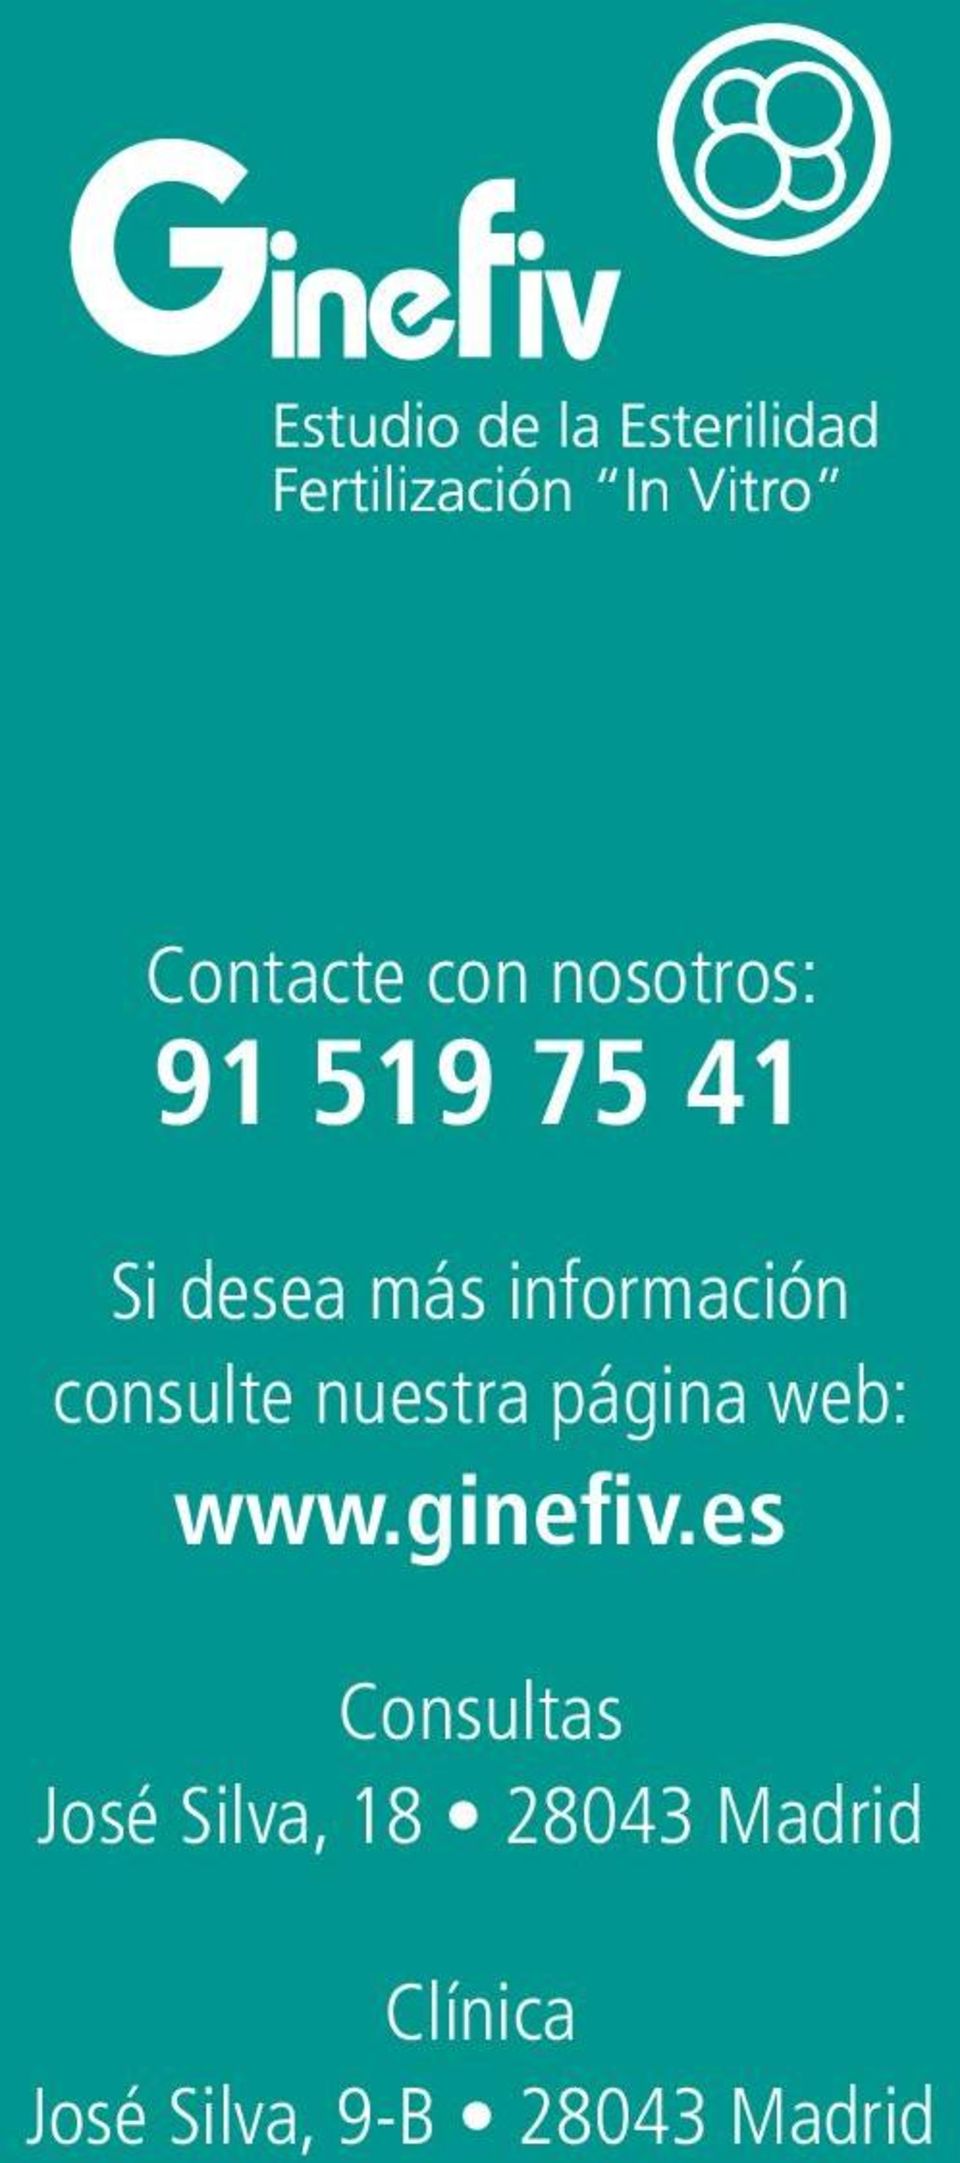 www.ginefiv.